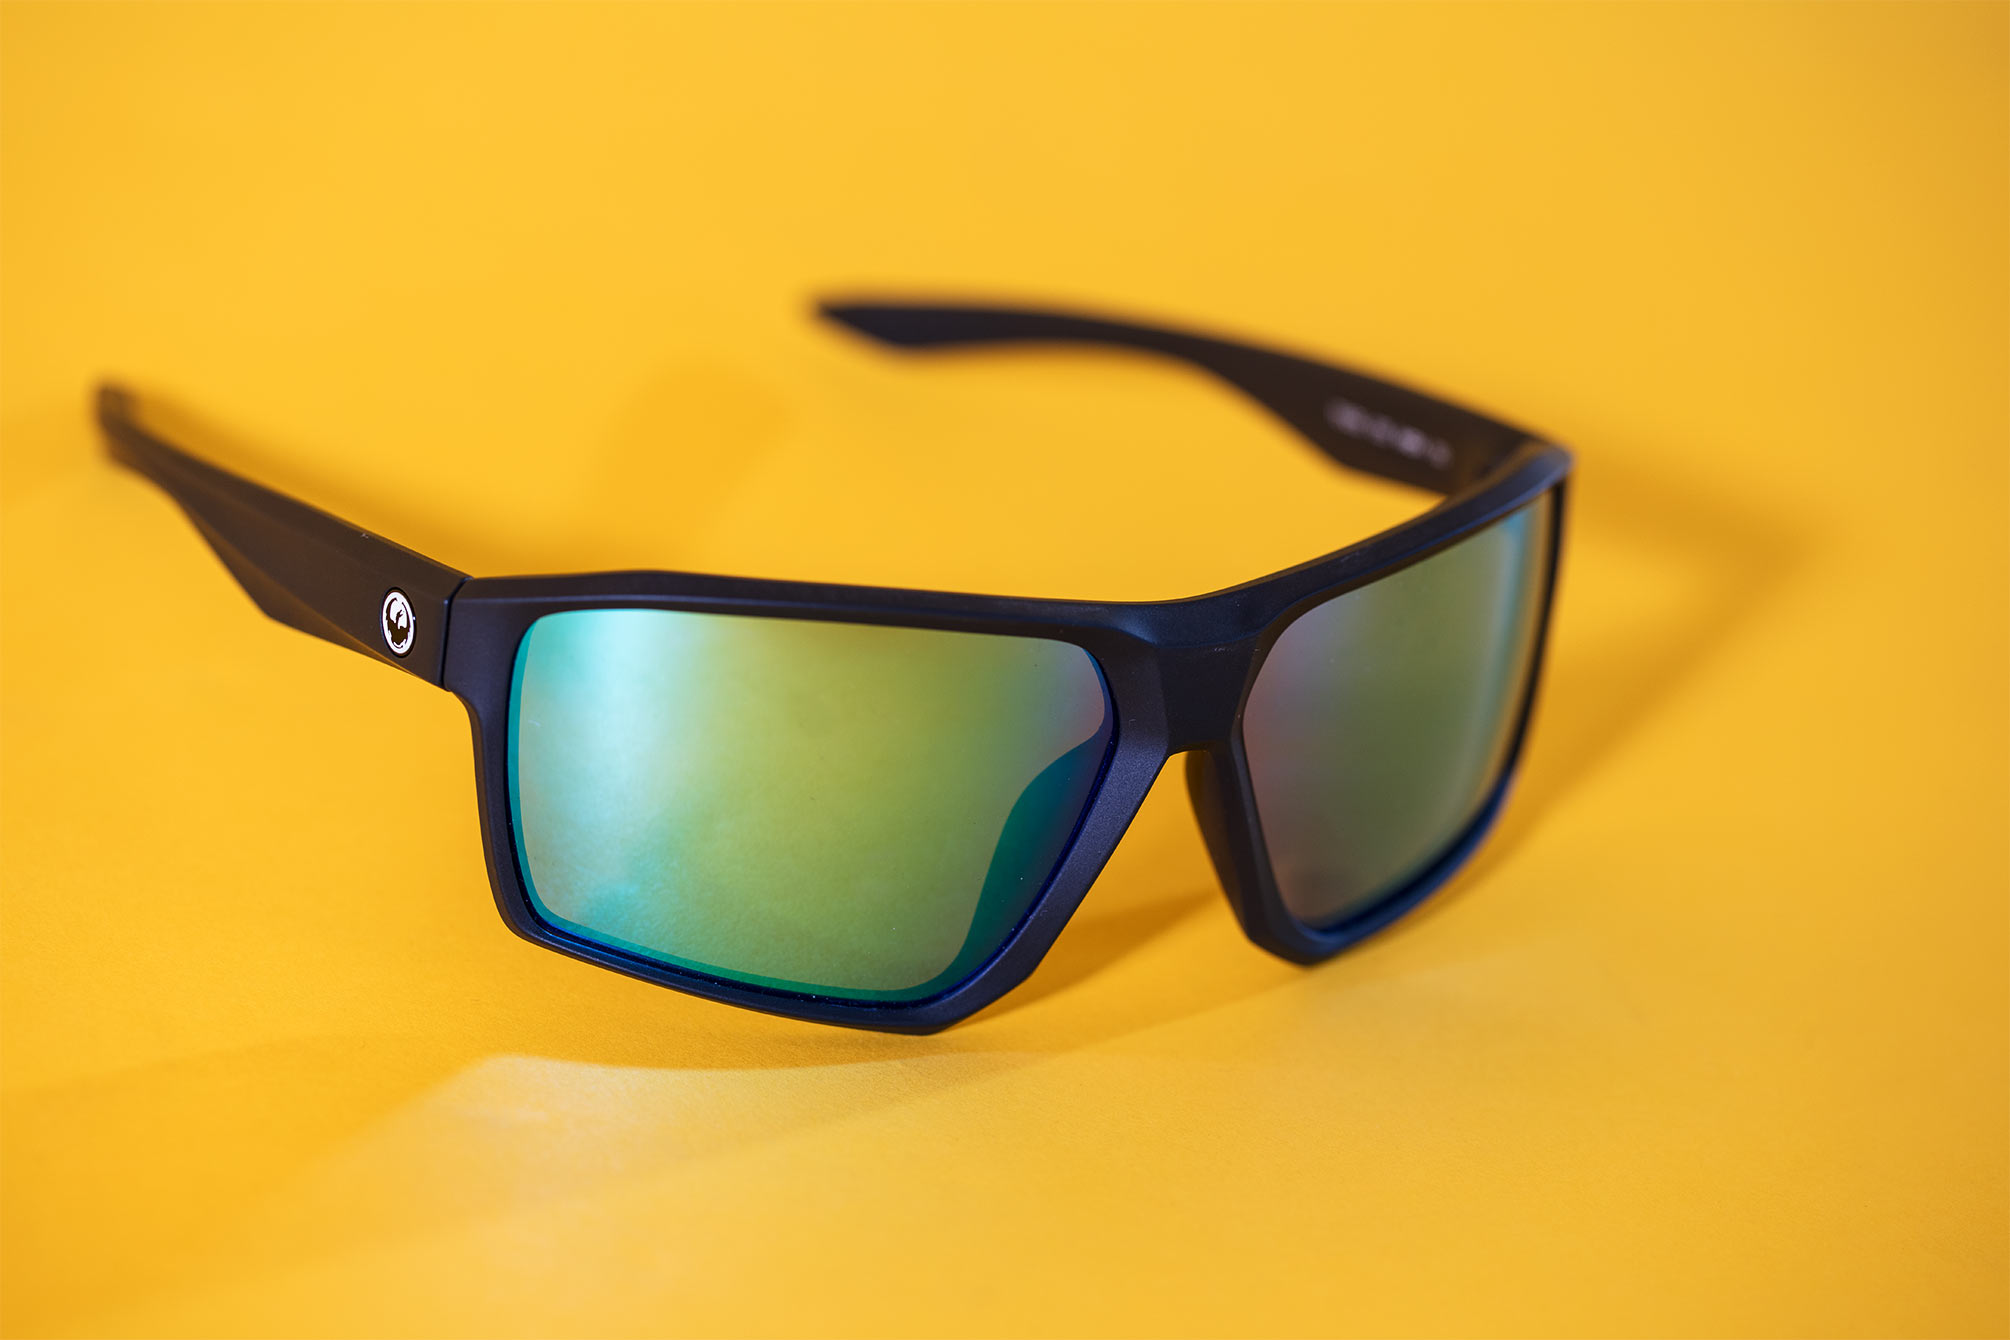 Dragon TenZig sunglasses review